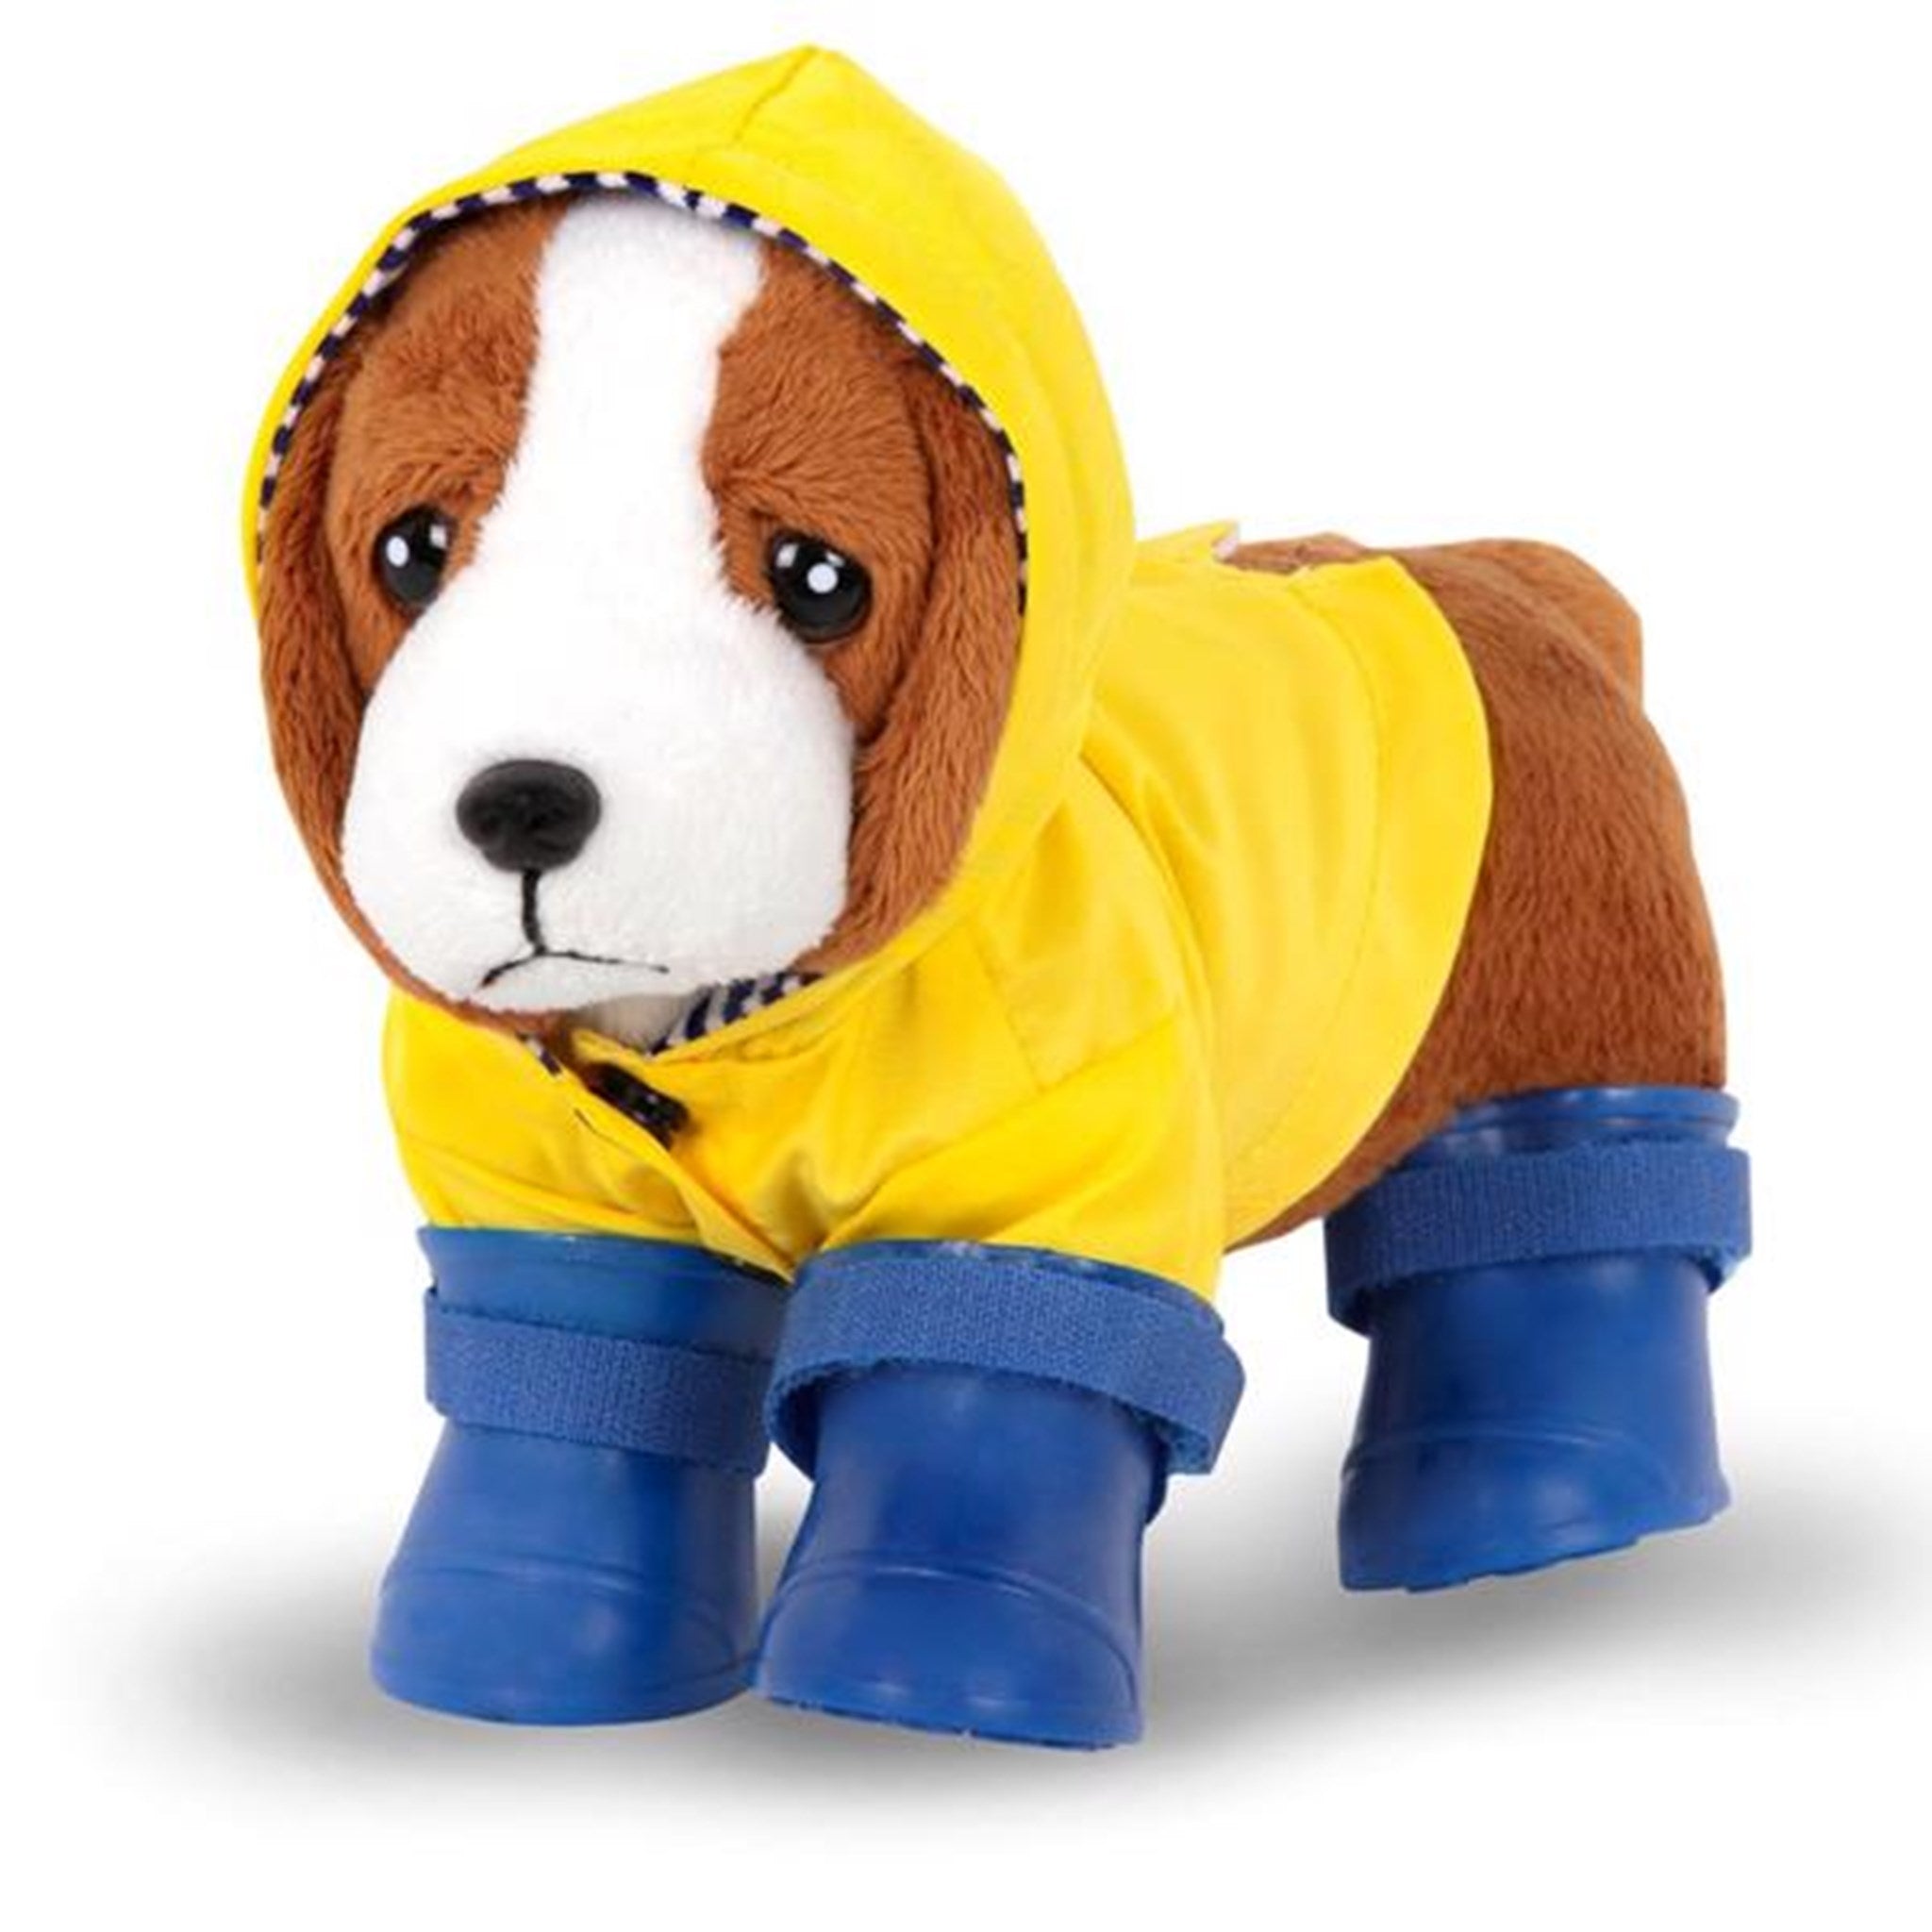 Our Generation Dog Clothes - Rainwear 2